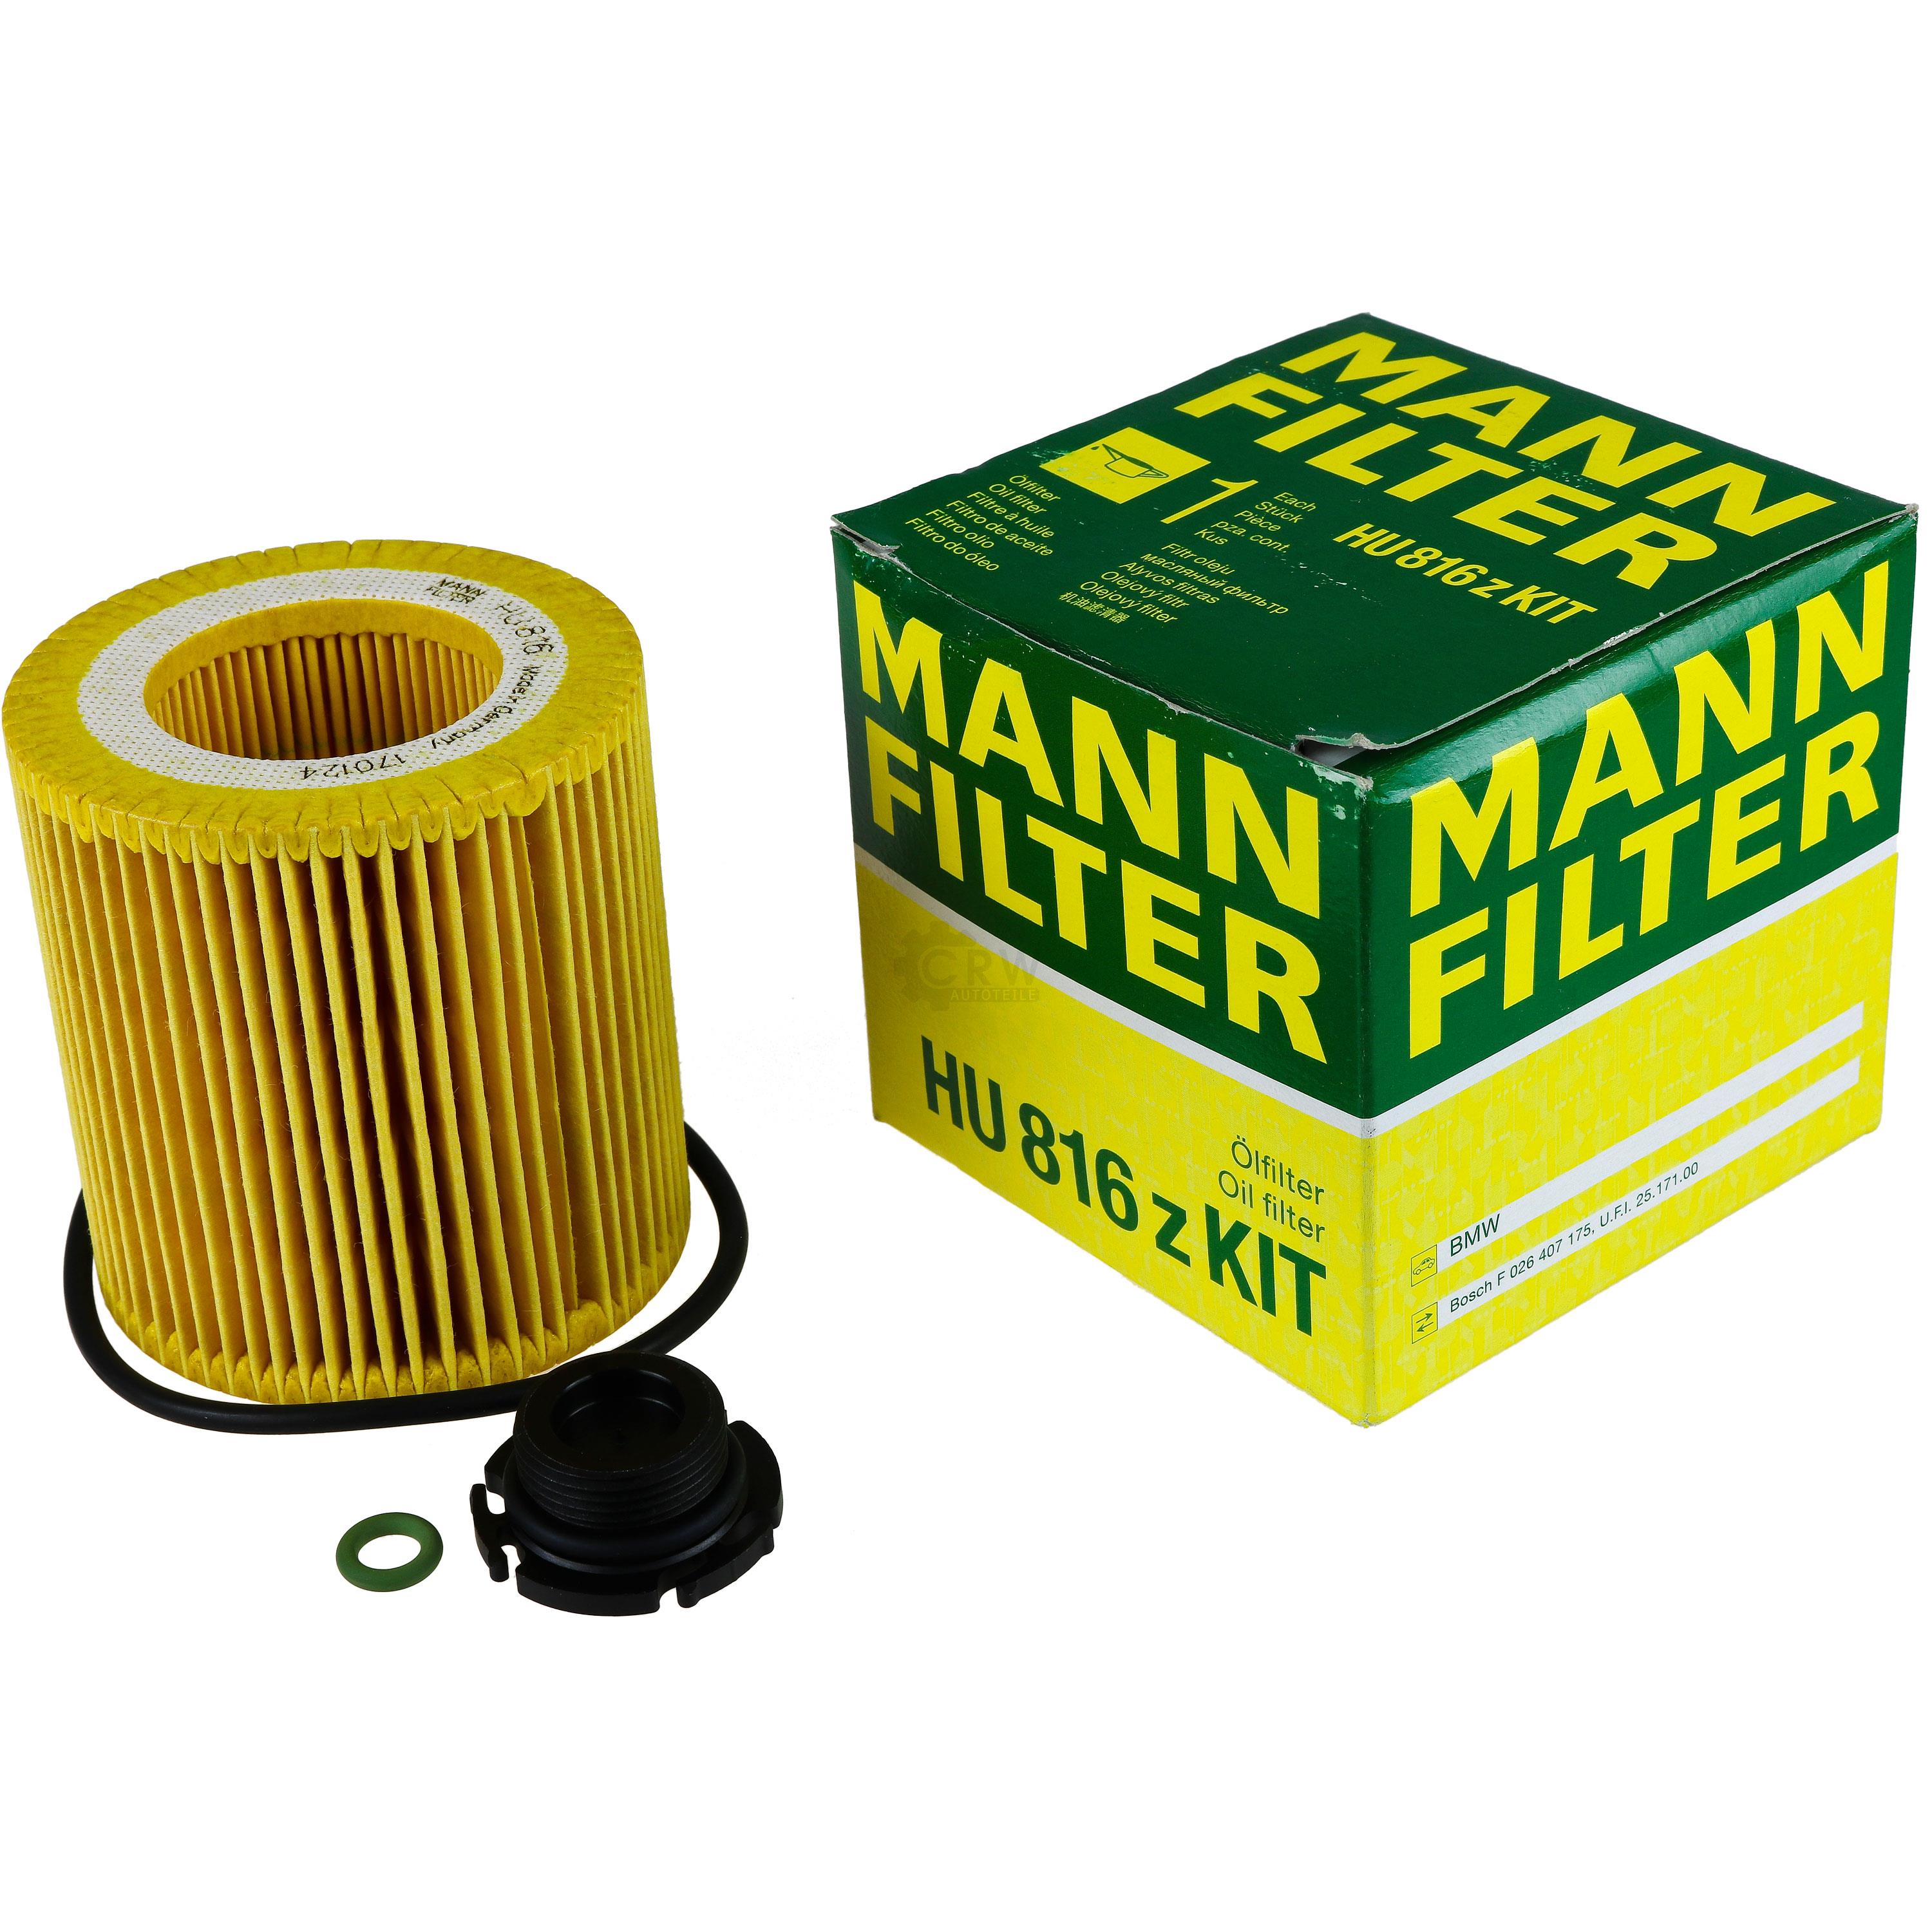 MANN-FILTER Ölfilter HU 816 z KIT Oil Filter